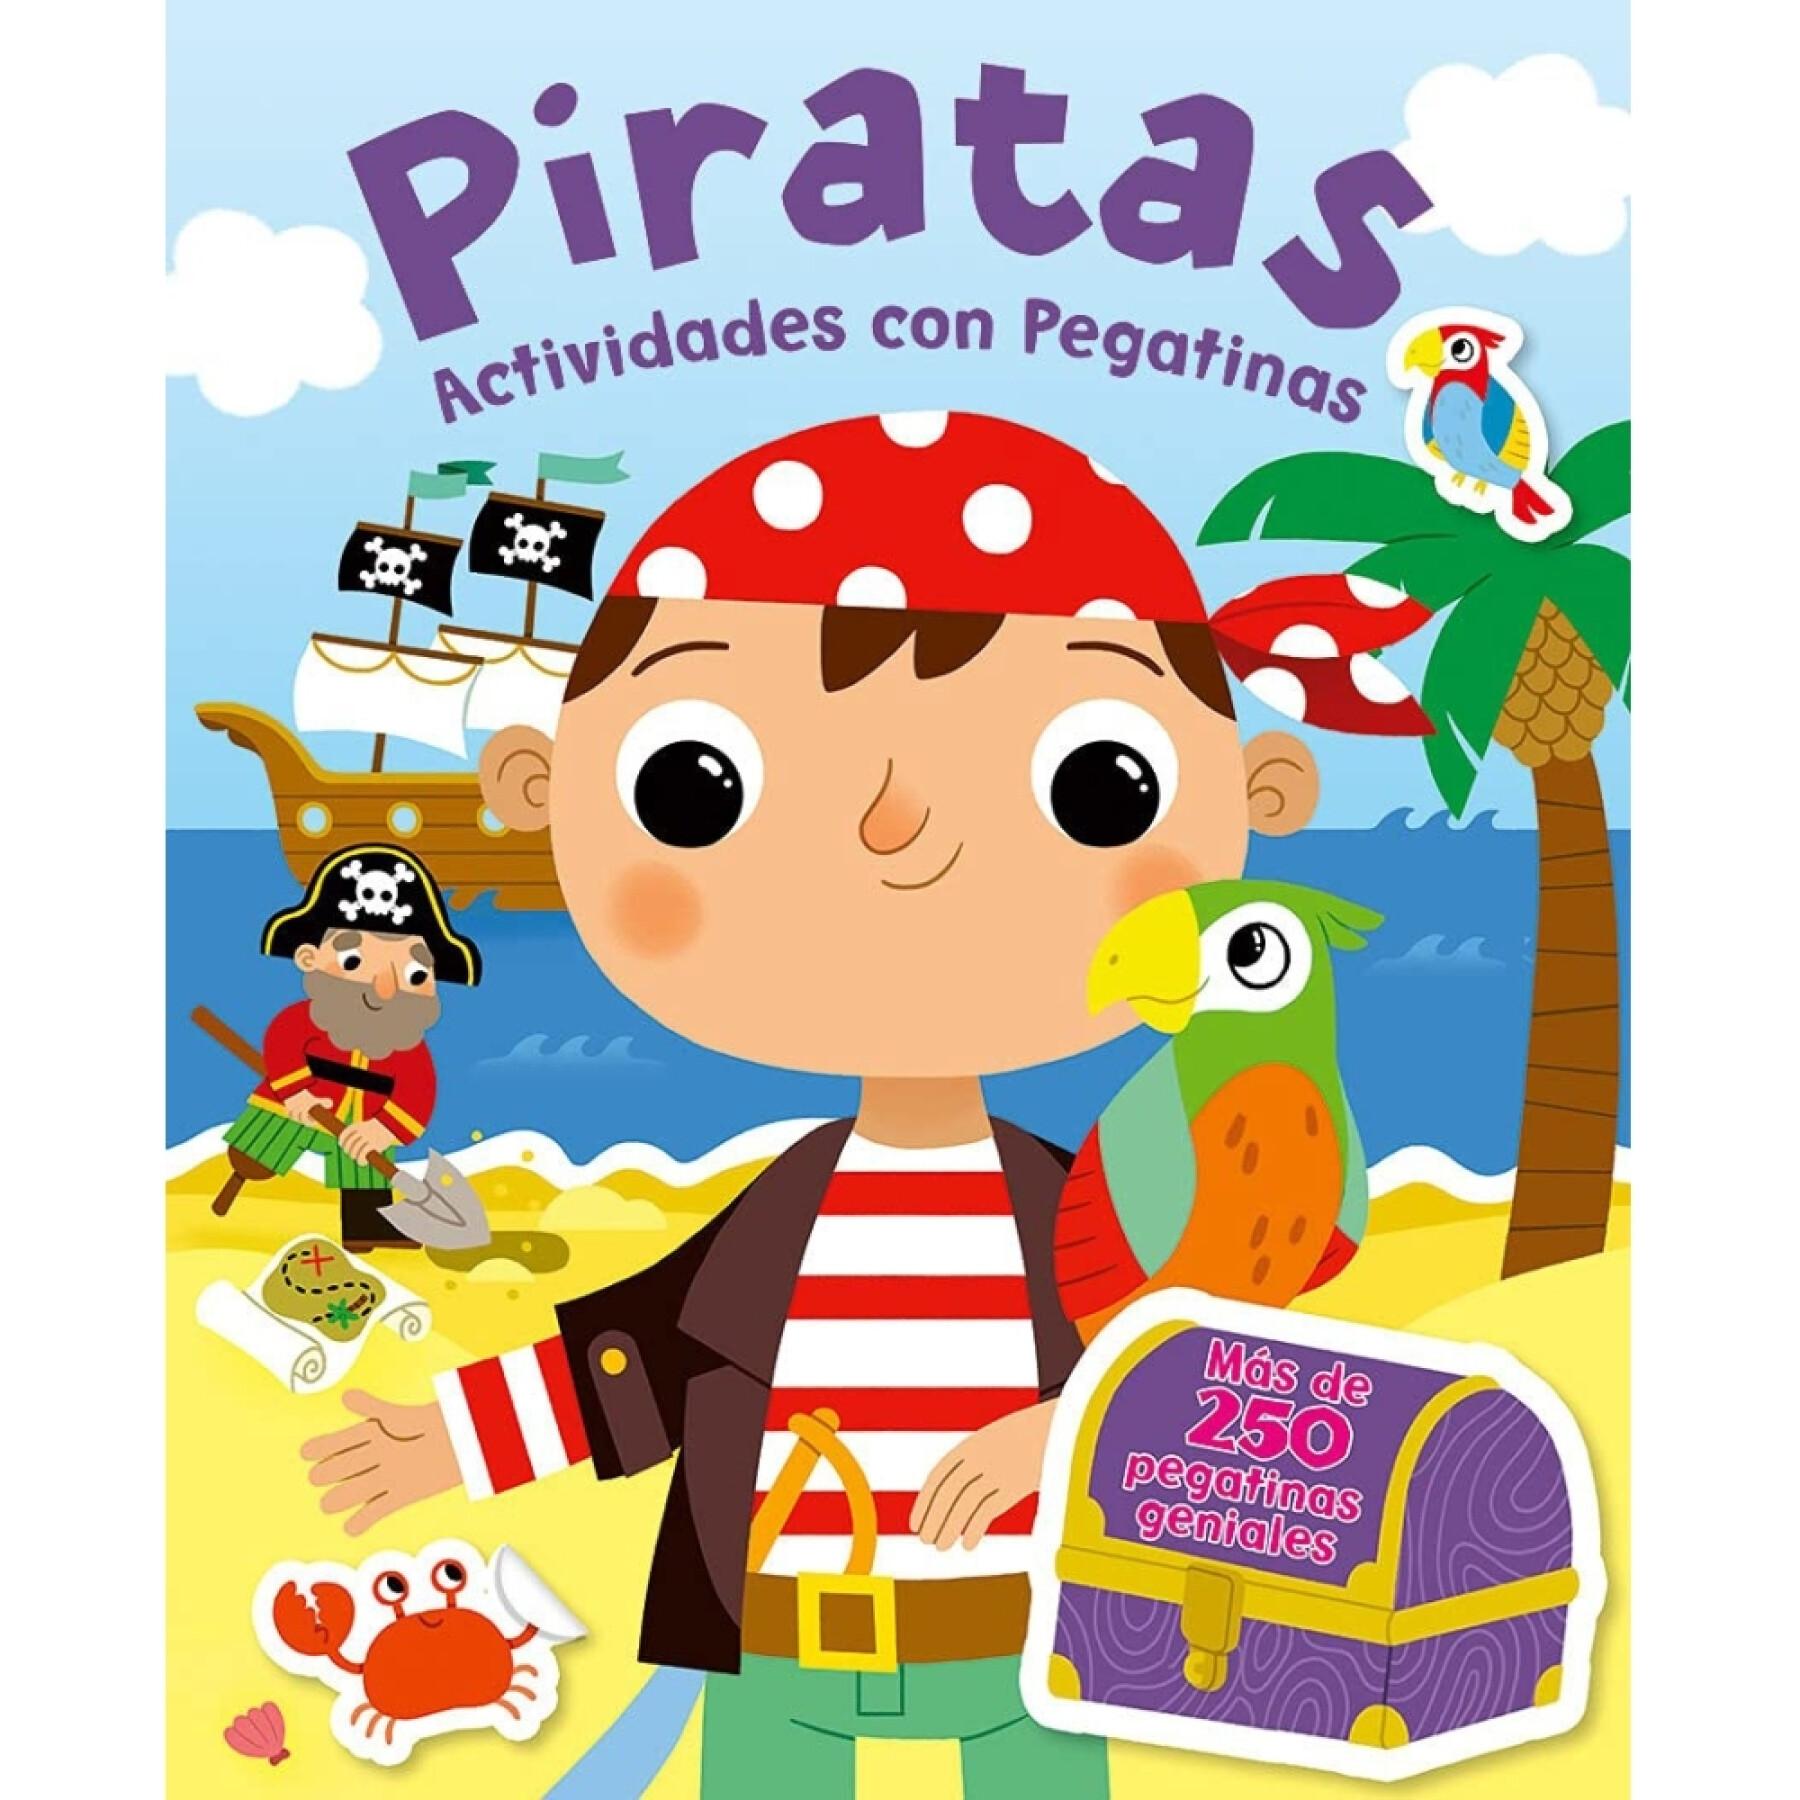 Stickerboek pirates Edibook